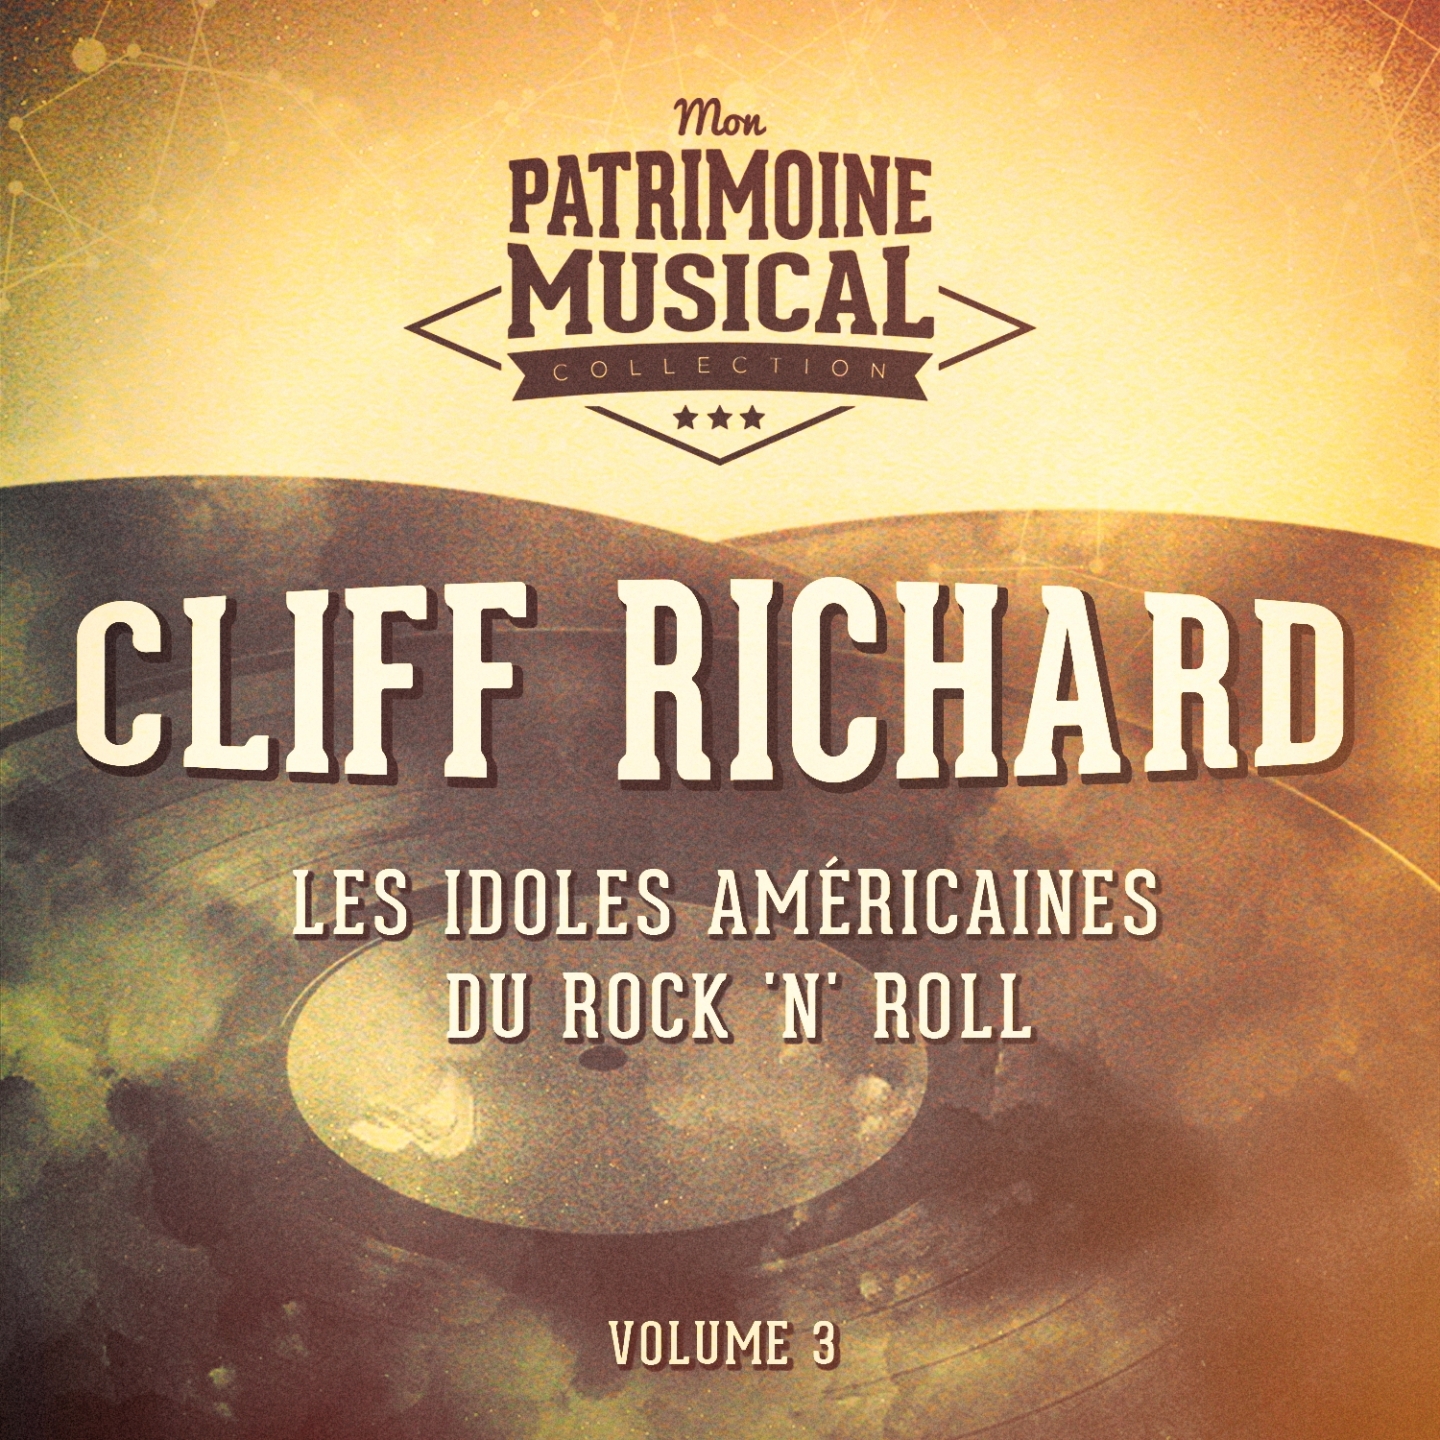 Les idoles anglaises du rock 'n' roll : Cliff Richard, Vol. 3